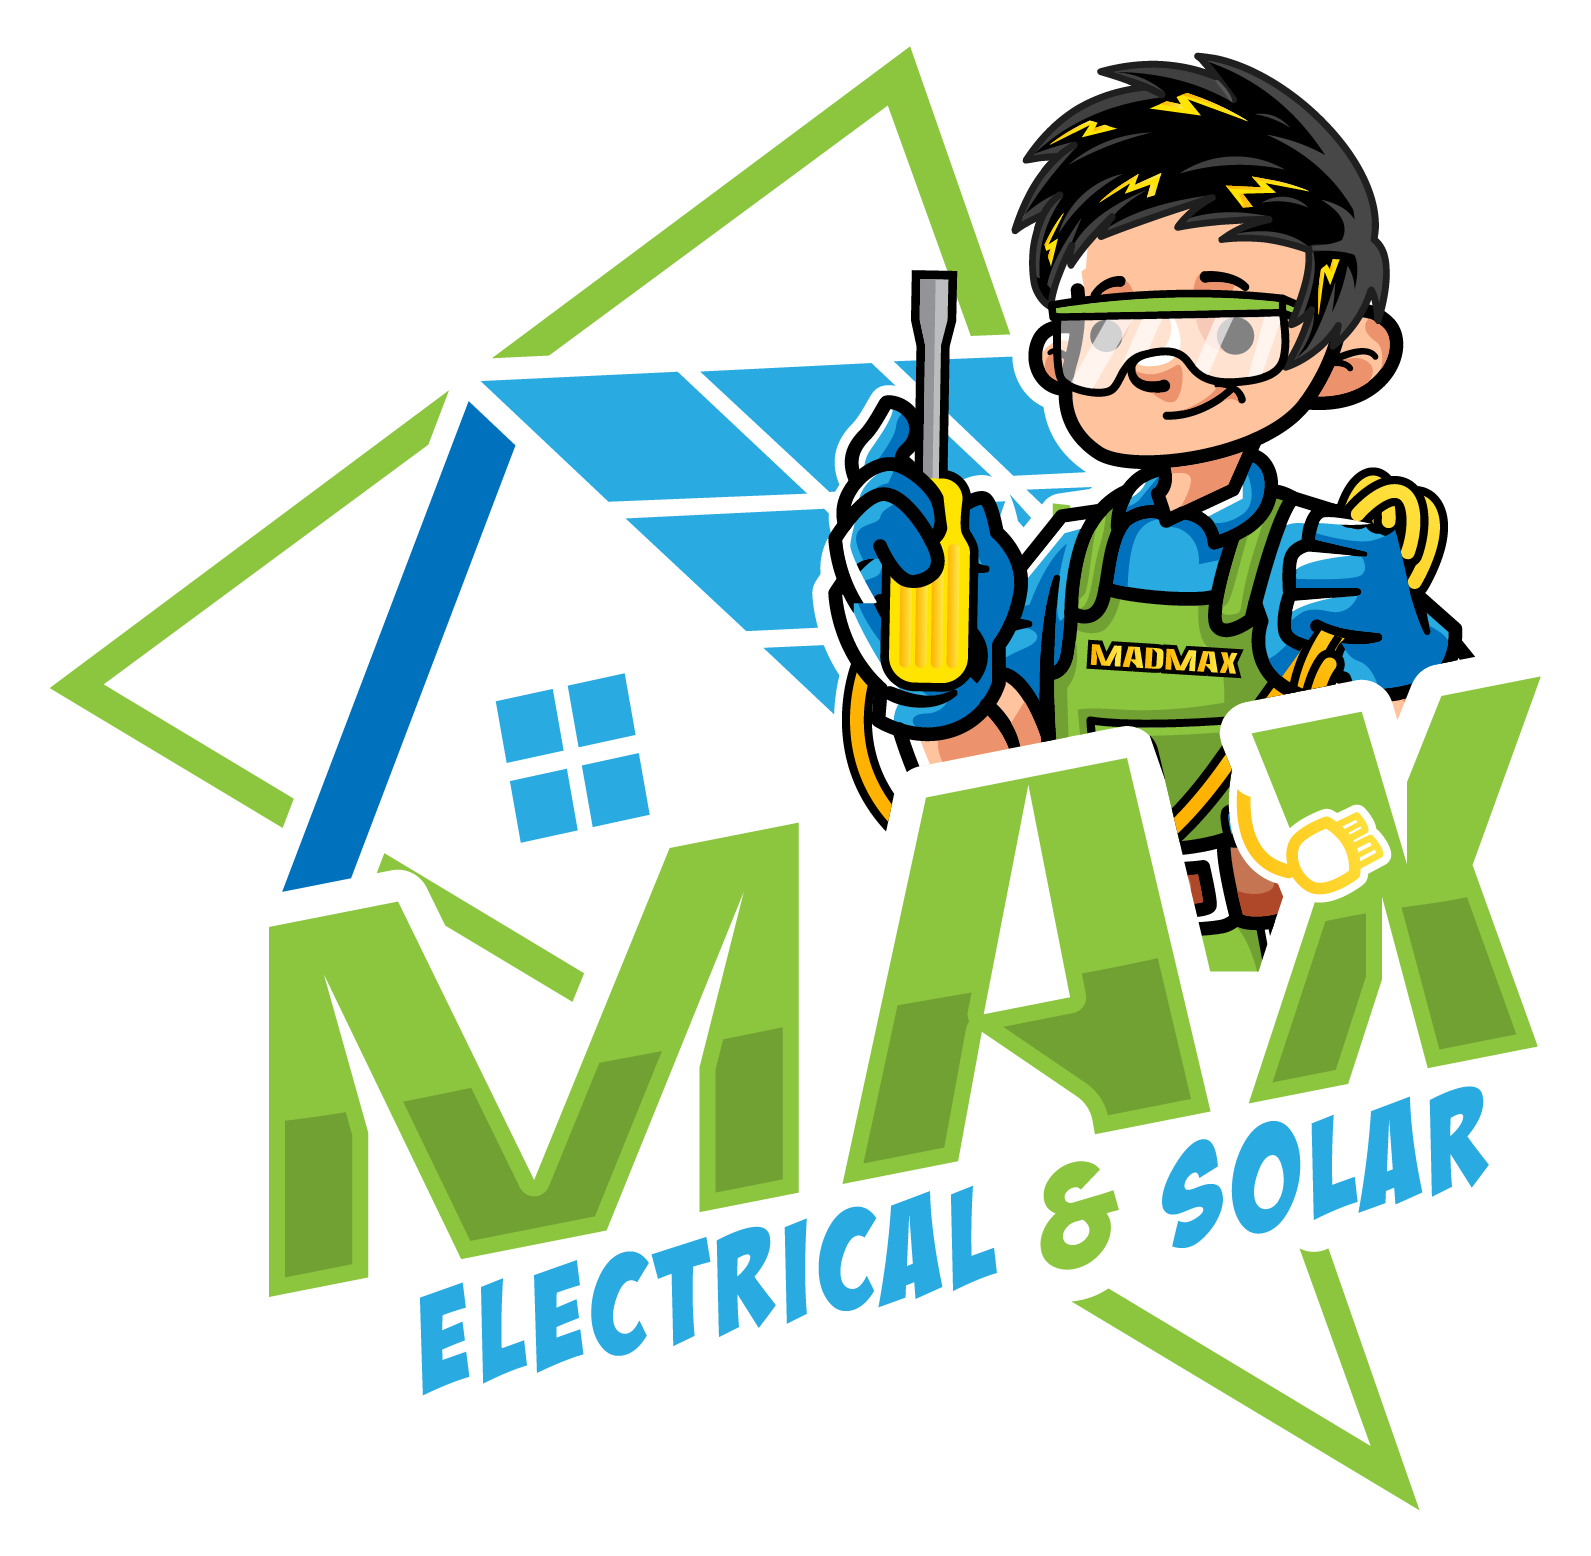 Max Electrical & Solar